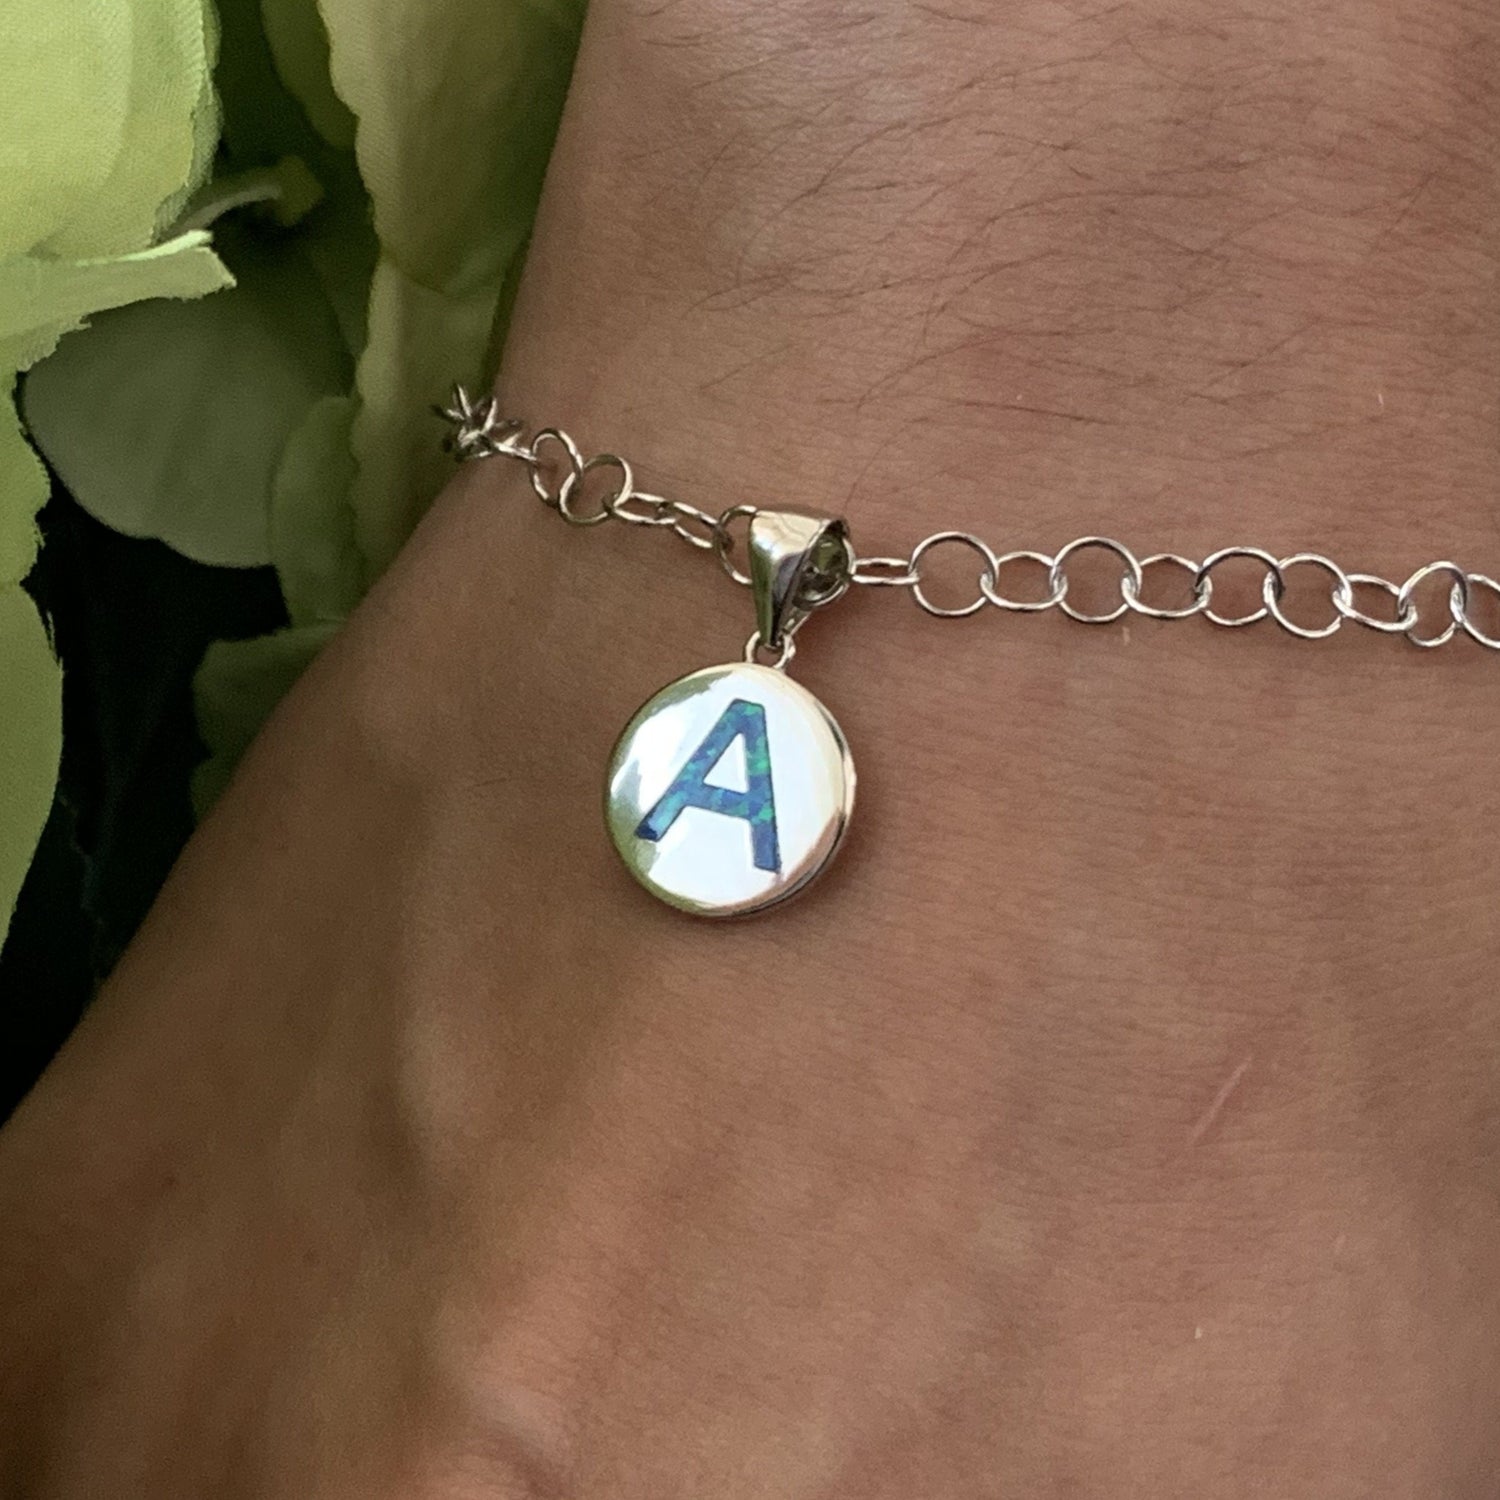 Opalite initial charm shown on model as a charm bracelet.